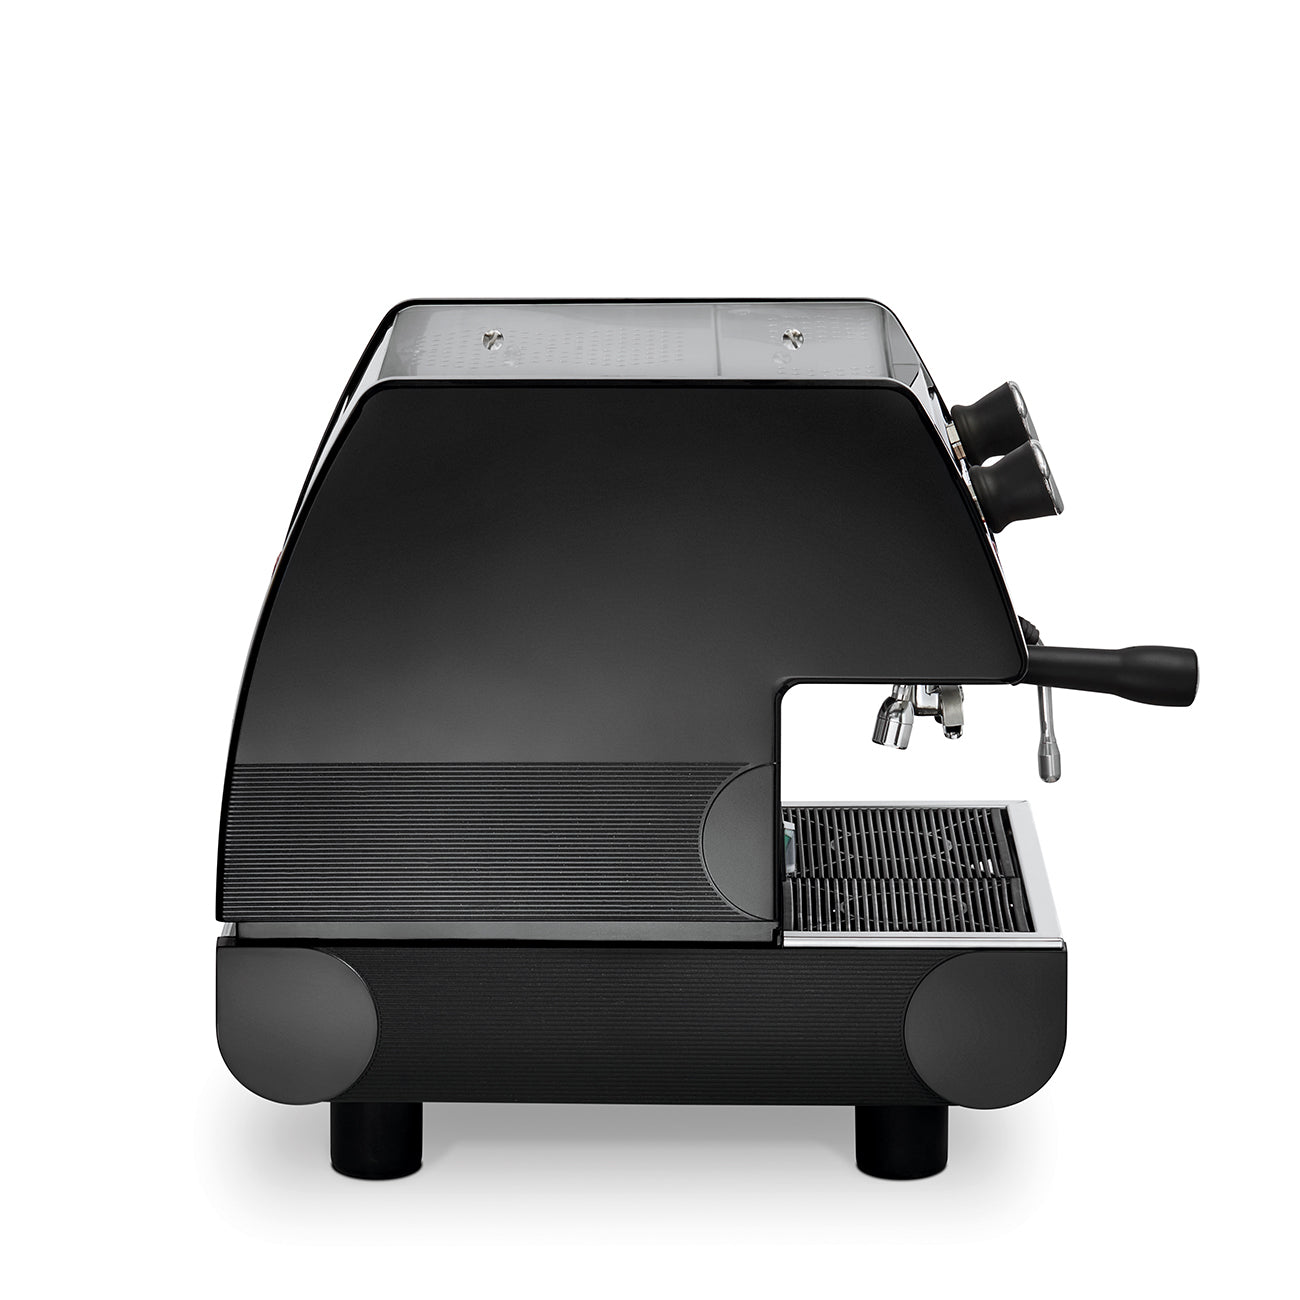 La Pavoni - Pub1V Single Group Head Automatic Espresso Coffee Machine JD Catering Equipment Solutions Ltd